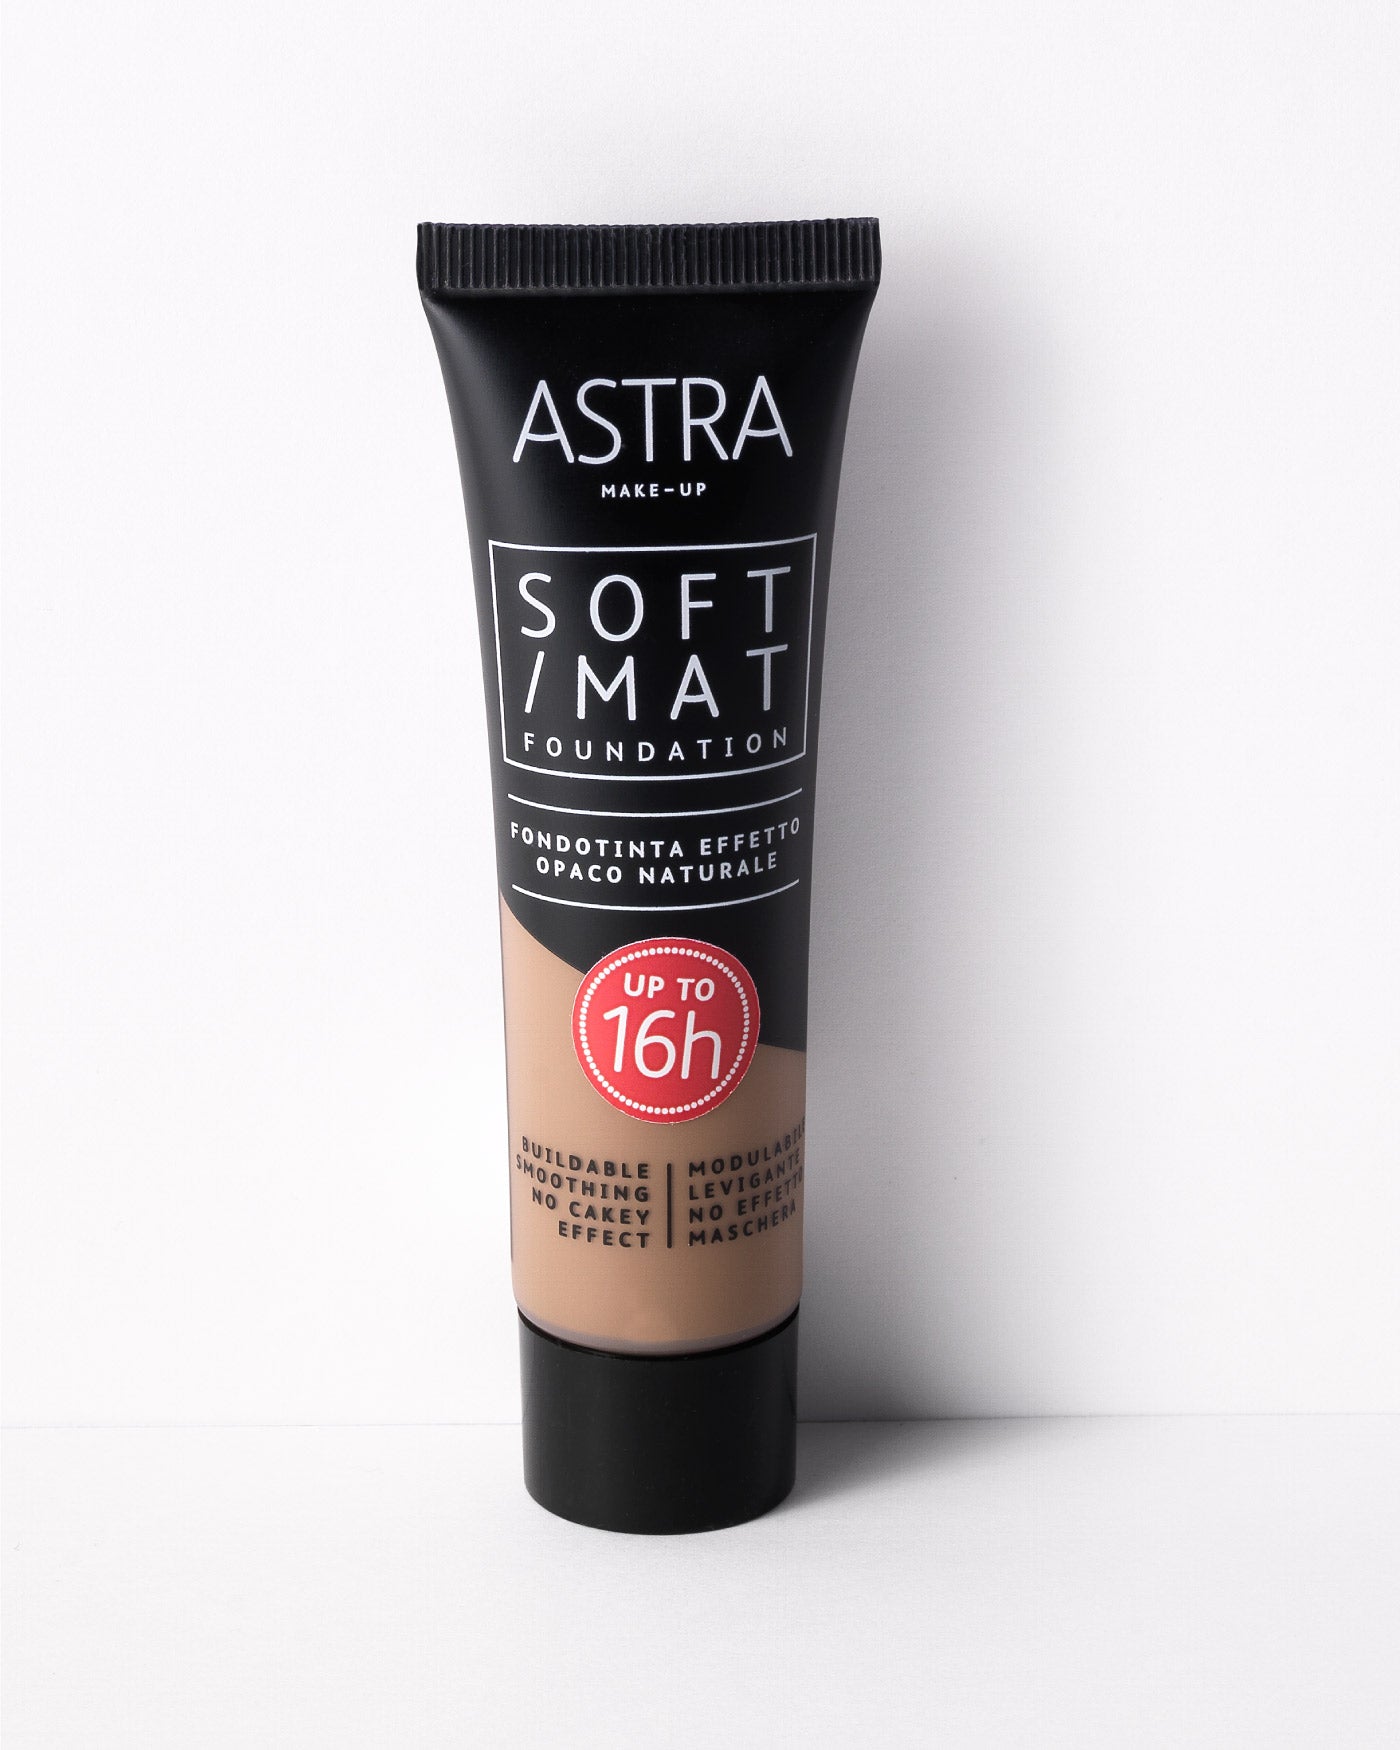 SOFT MAT FOUNDATION - Fondotinta Effetto Opaco Naturale - 08 - Choco - Astra Make-Up